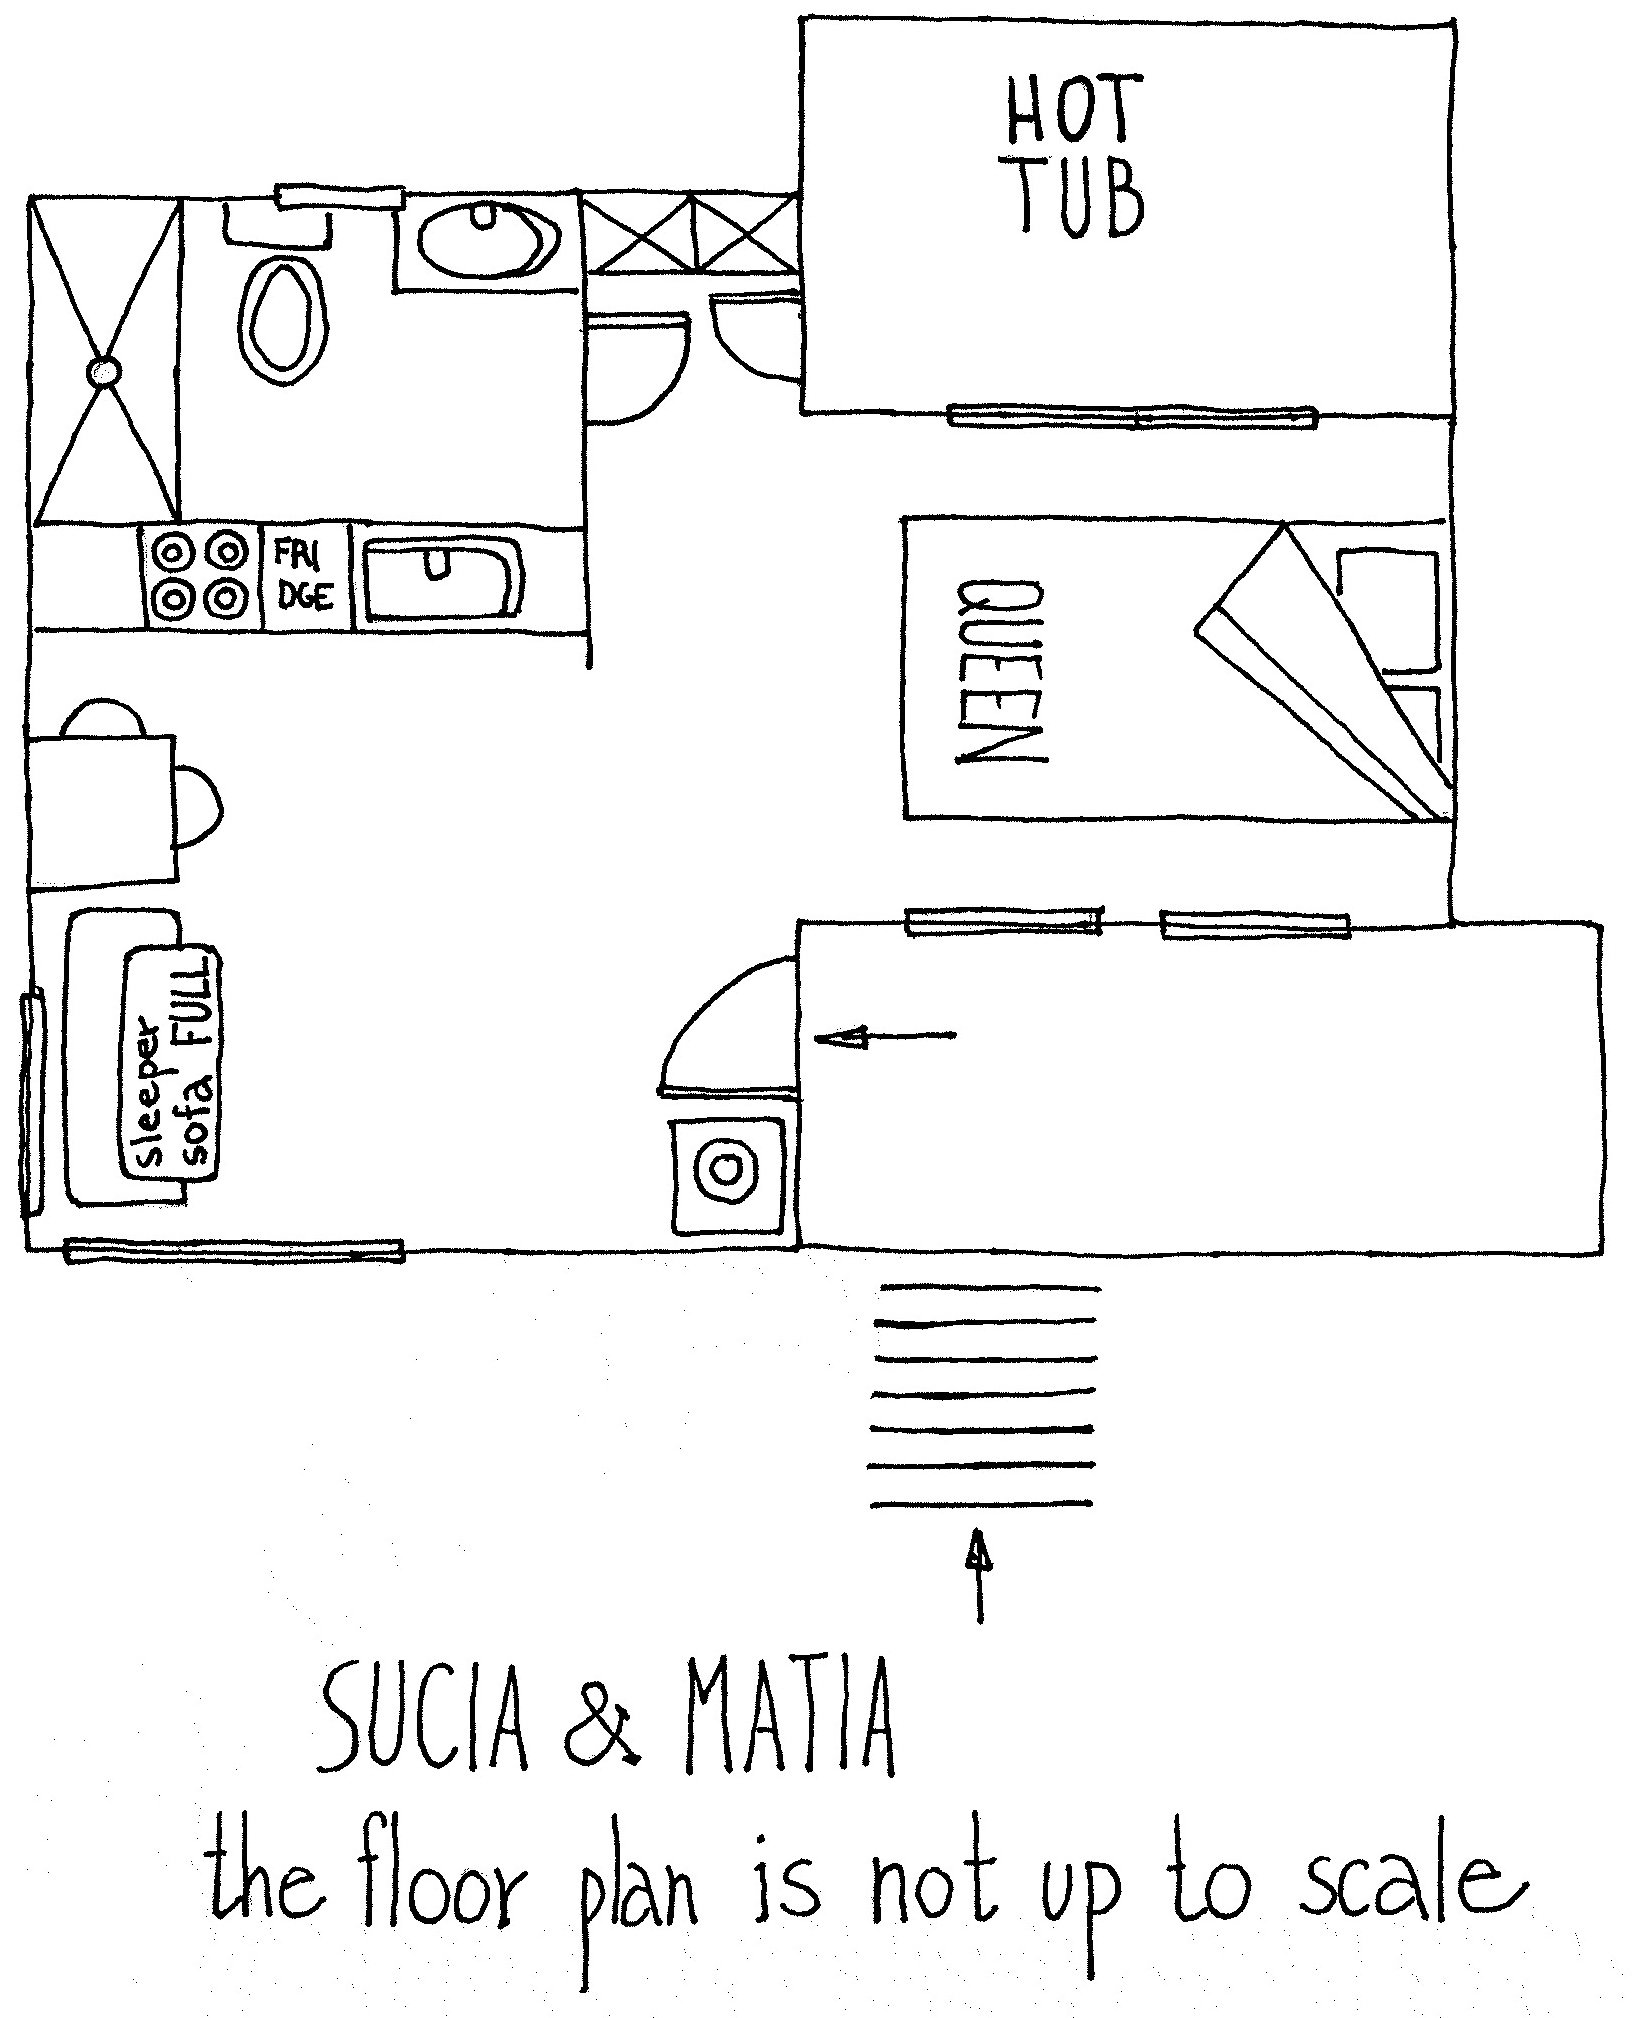 GIR Sucia & Matia Floorplans.jpg